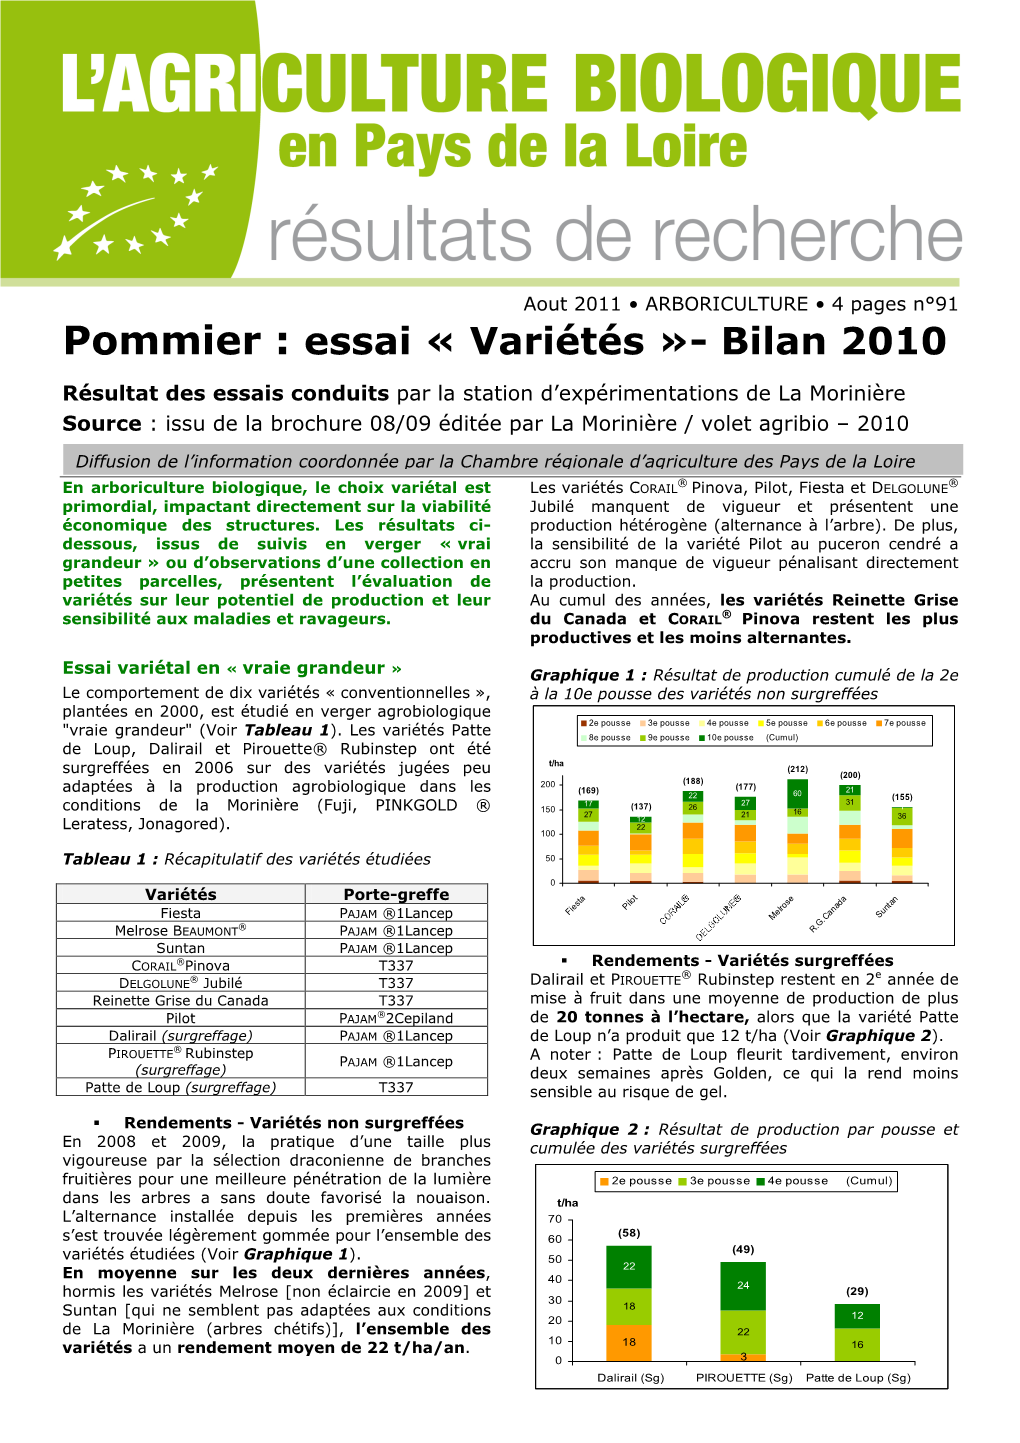 Pommier : Essai « Variétés »- Bilan 2010